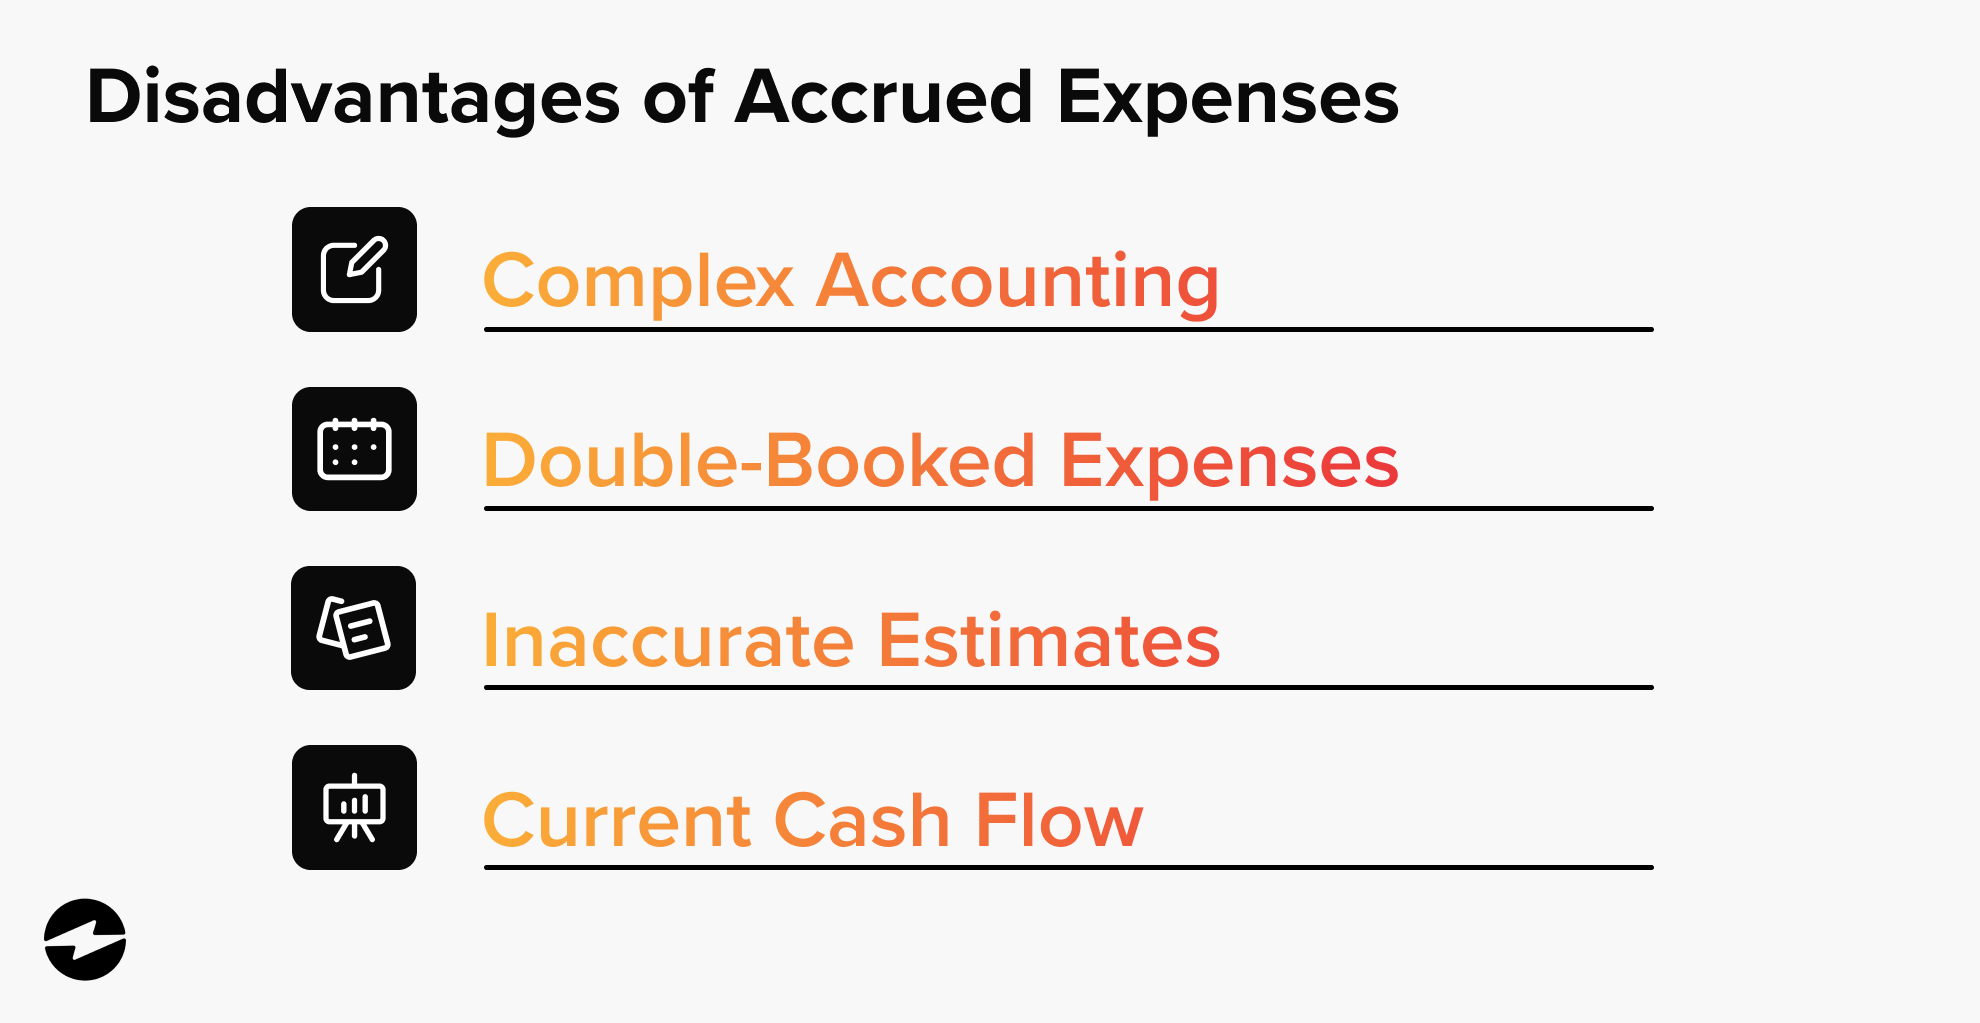 Disadvantages of accrued expenses